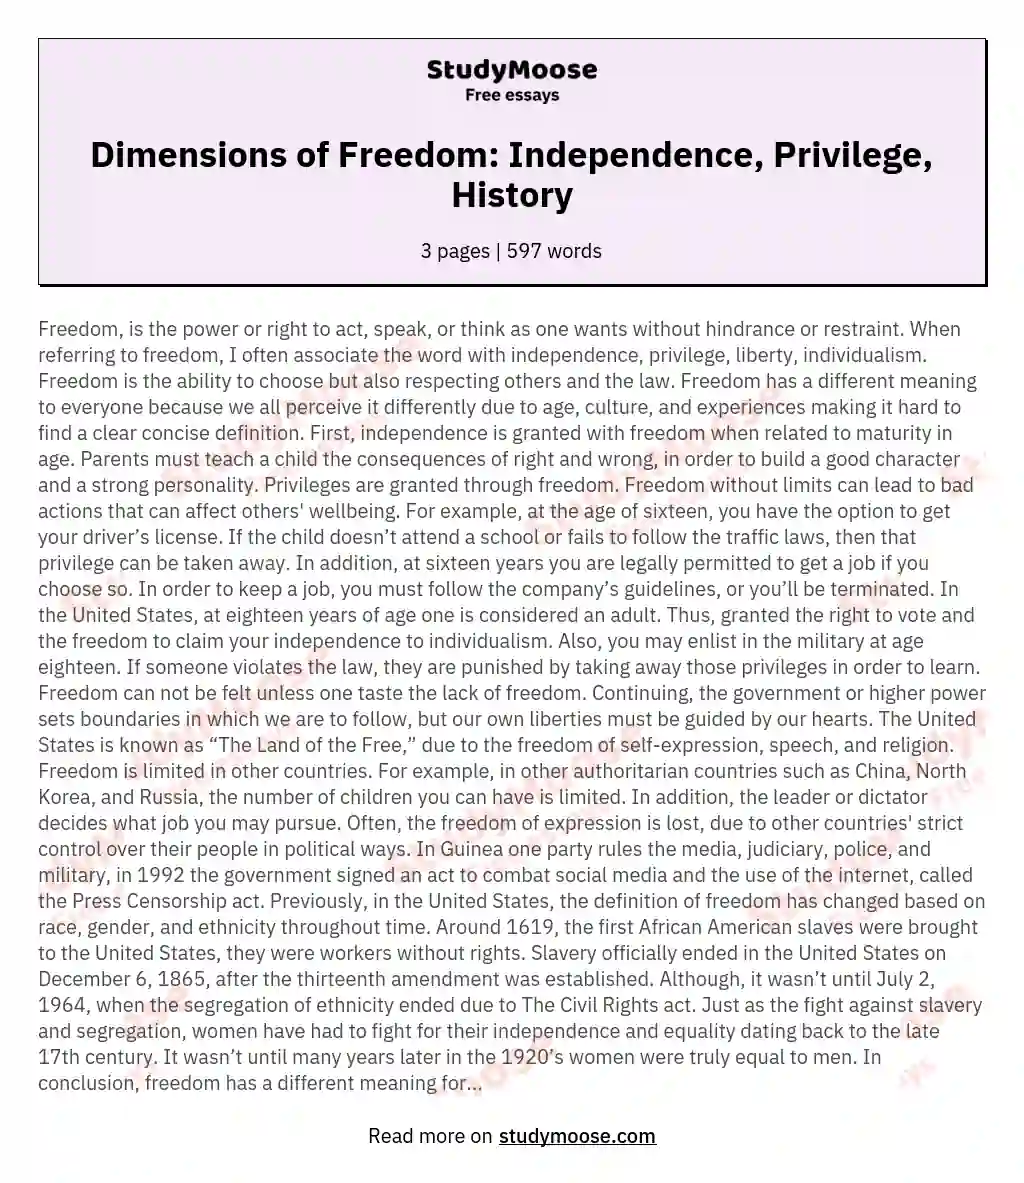 freedom in america essay